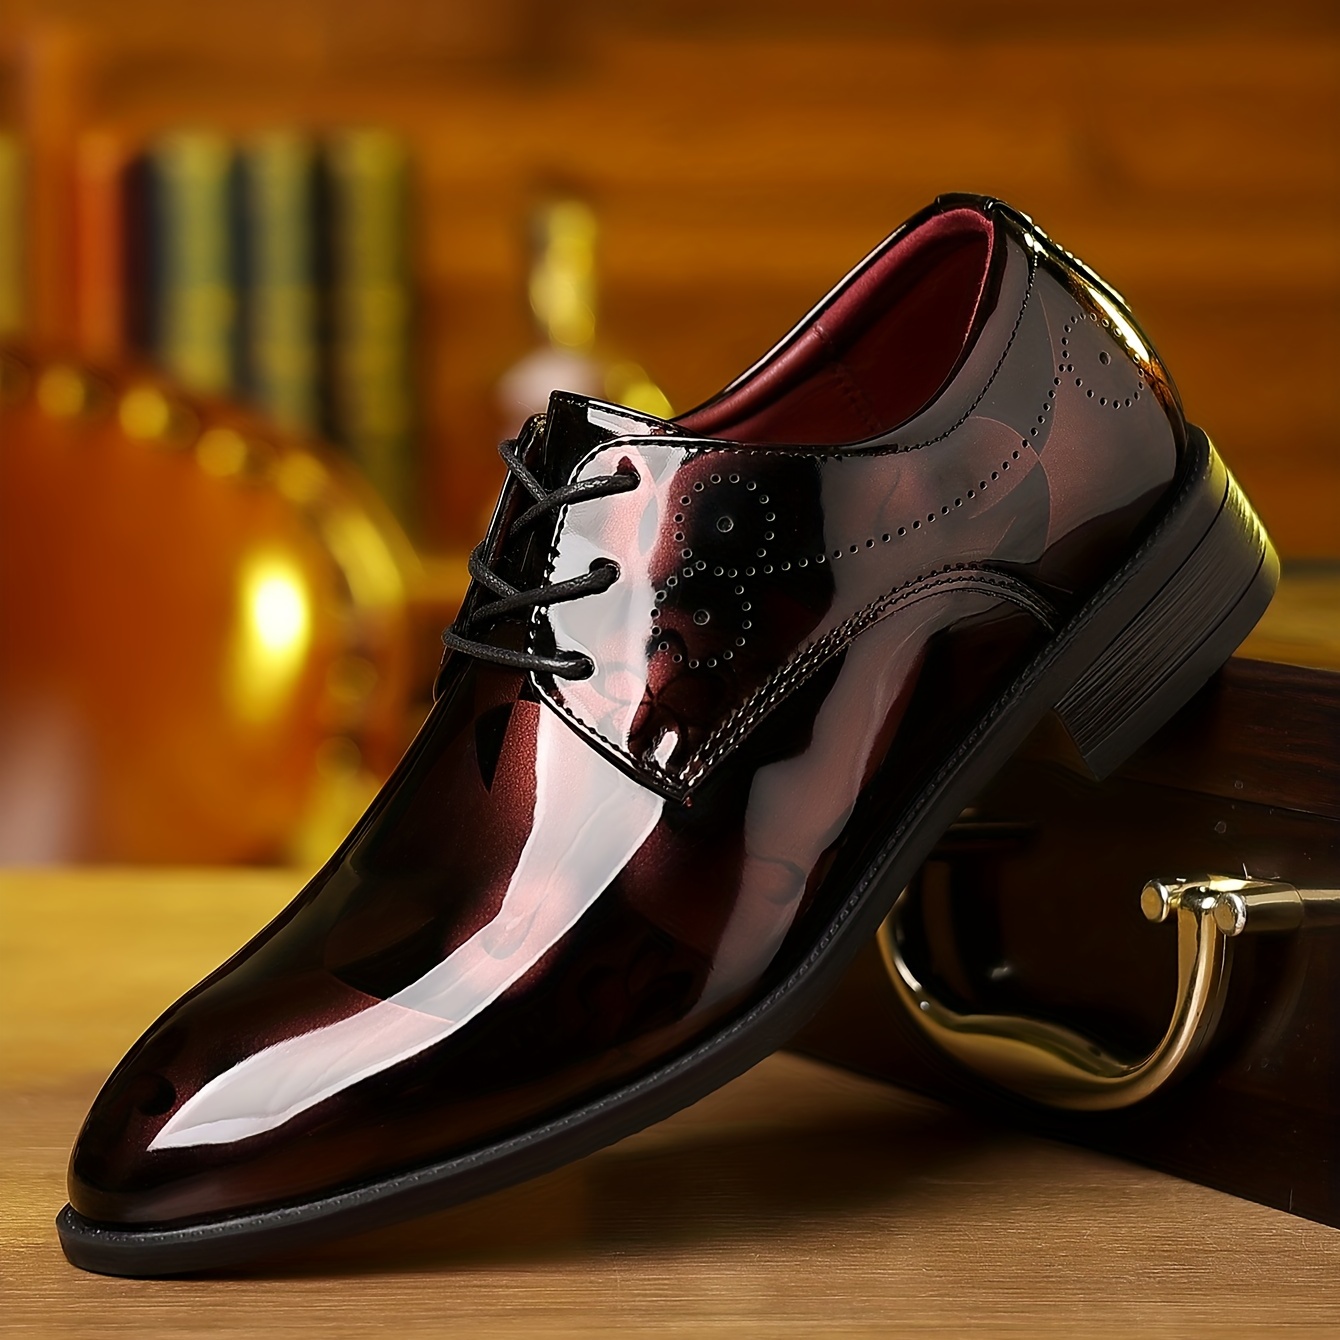 Men's Shoes, Casual, Dress & Formal Shoes